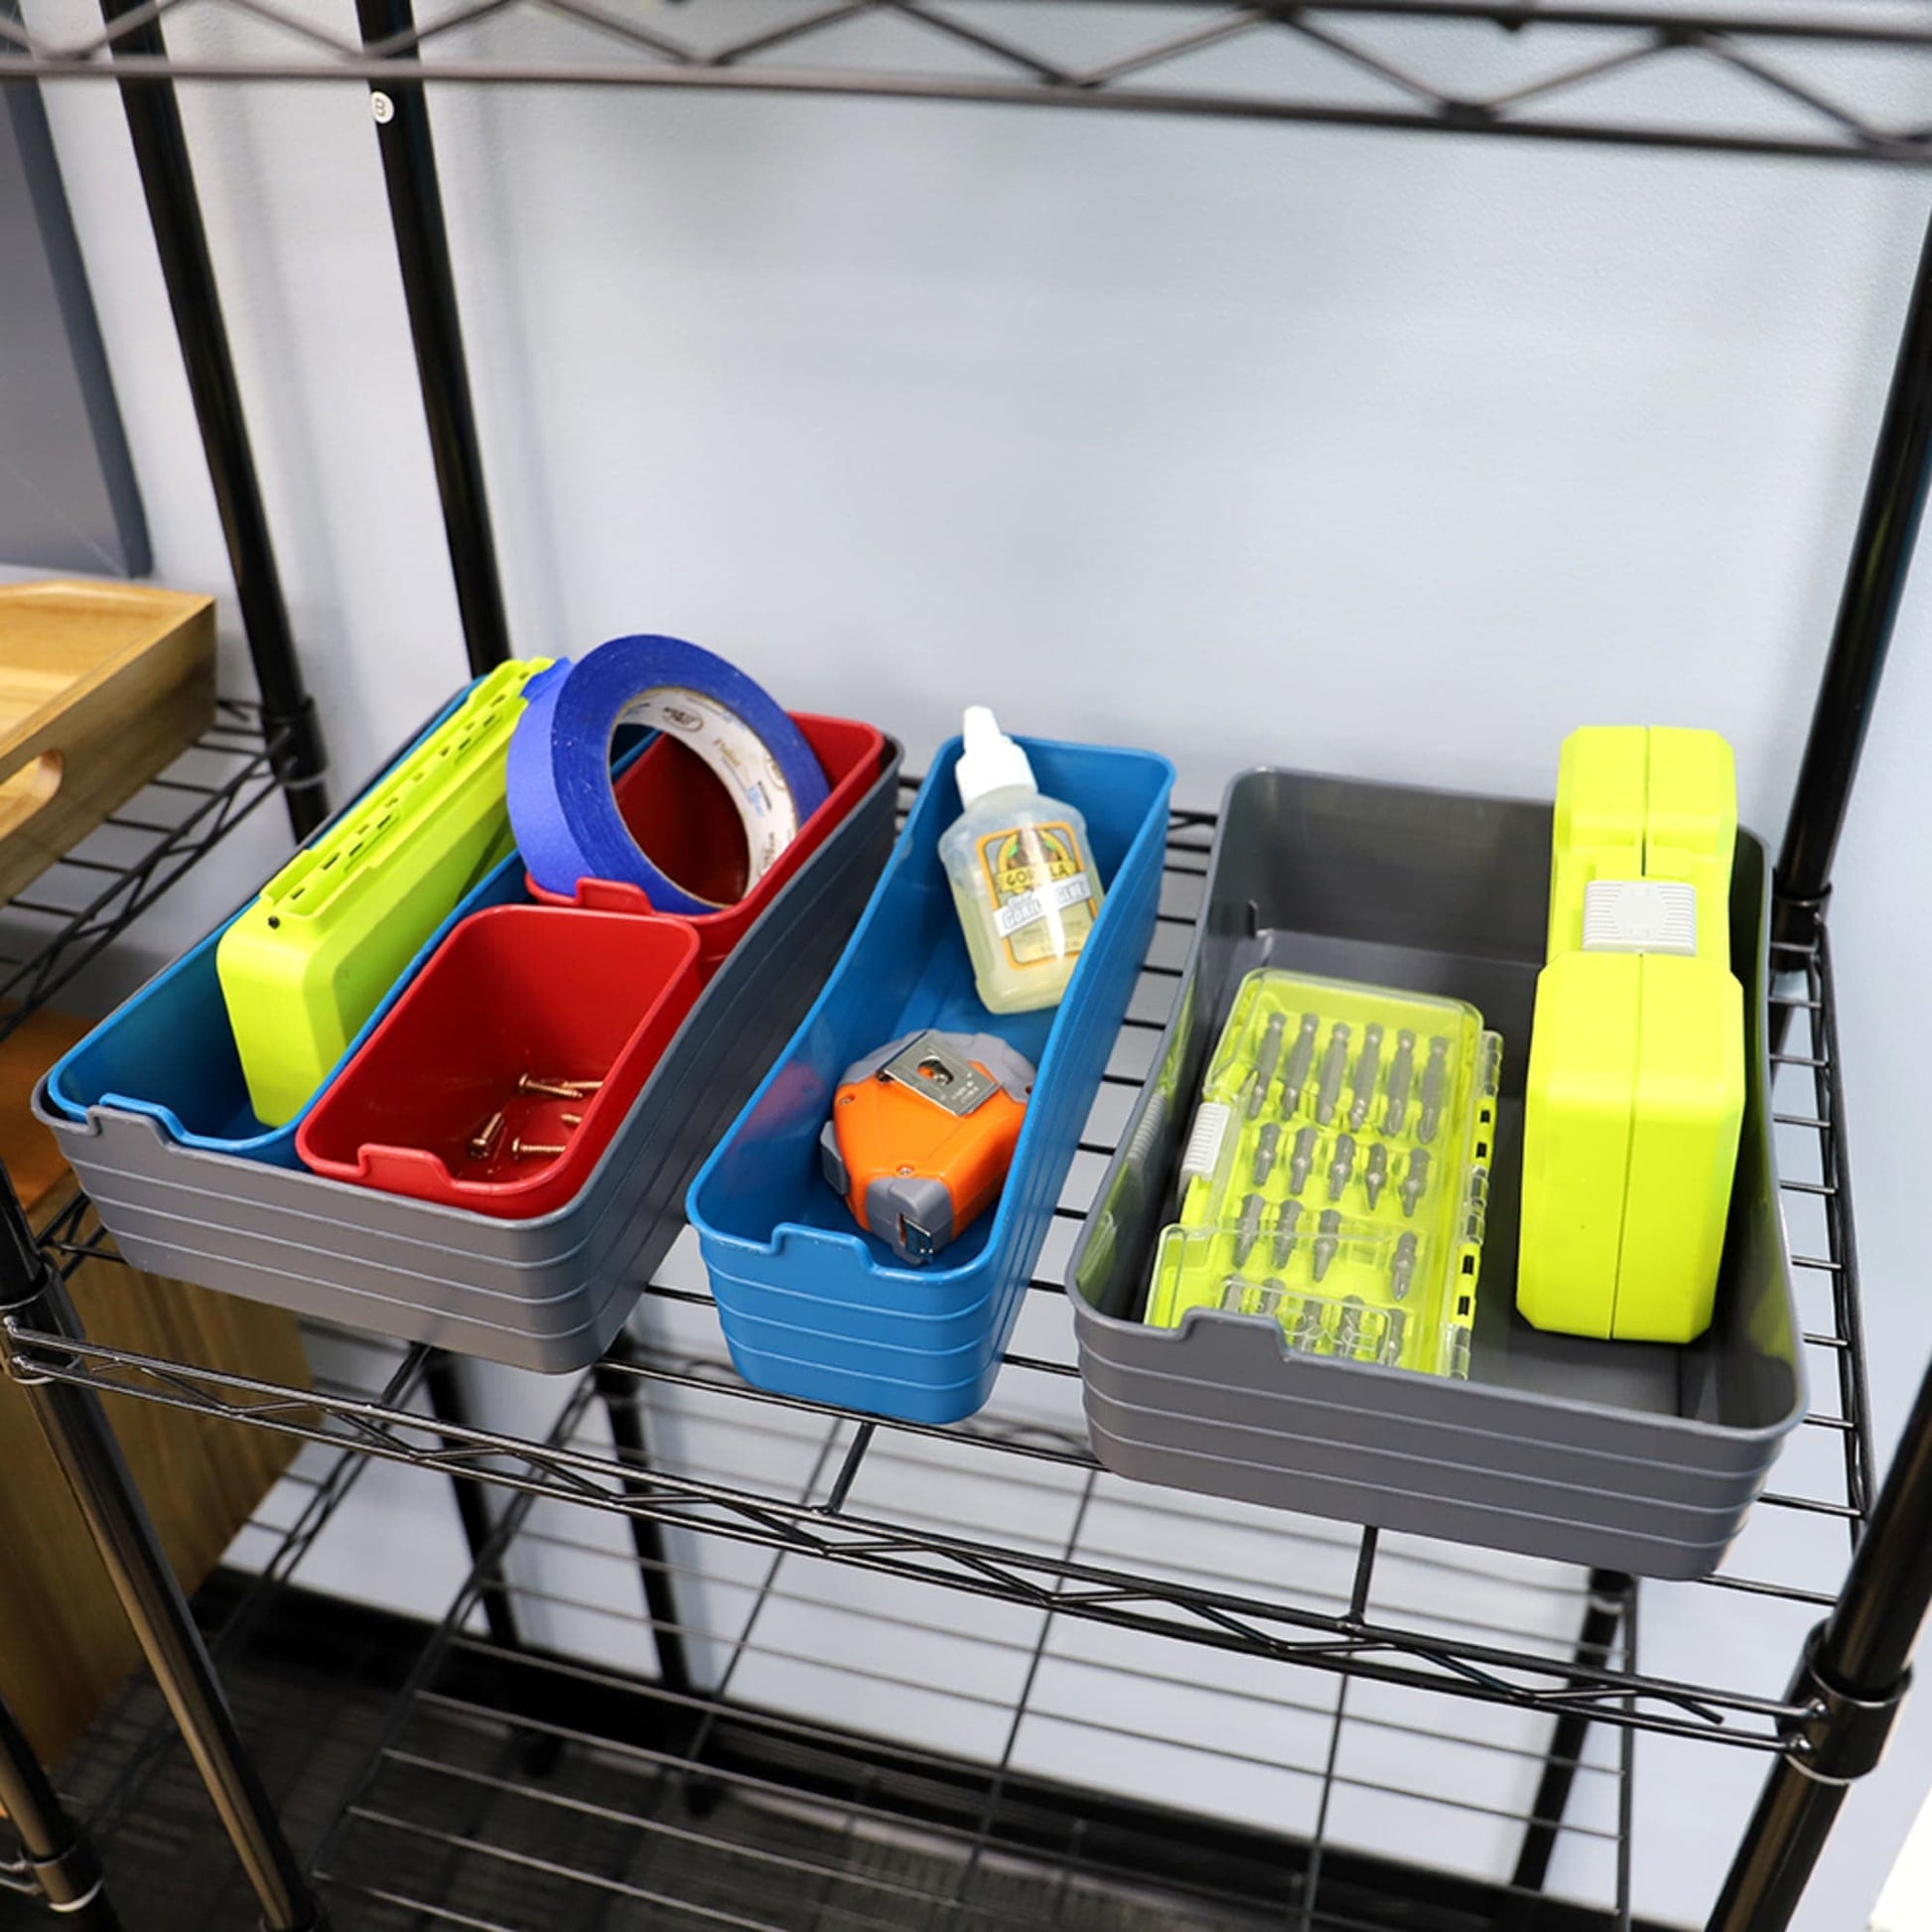 Mainstays Set of 5 Flexible Drawer Storage Organizers, Blue